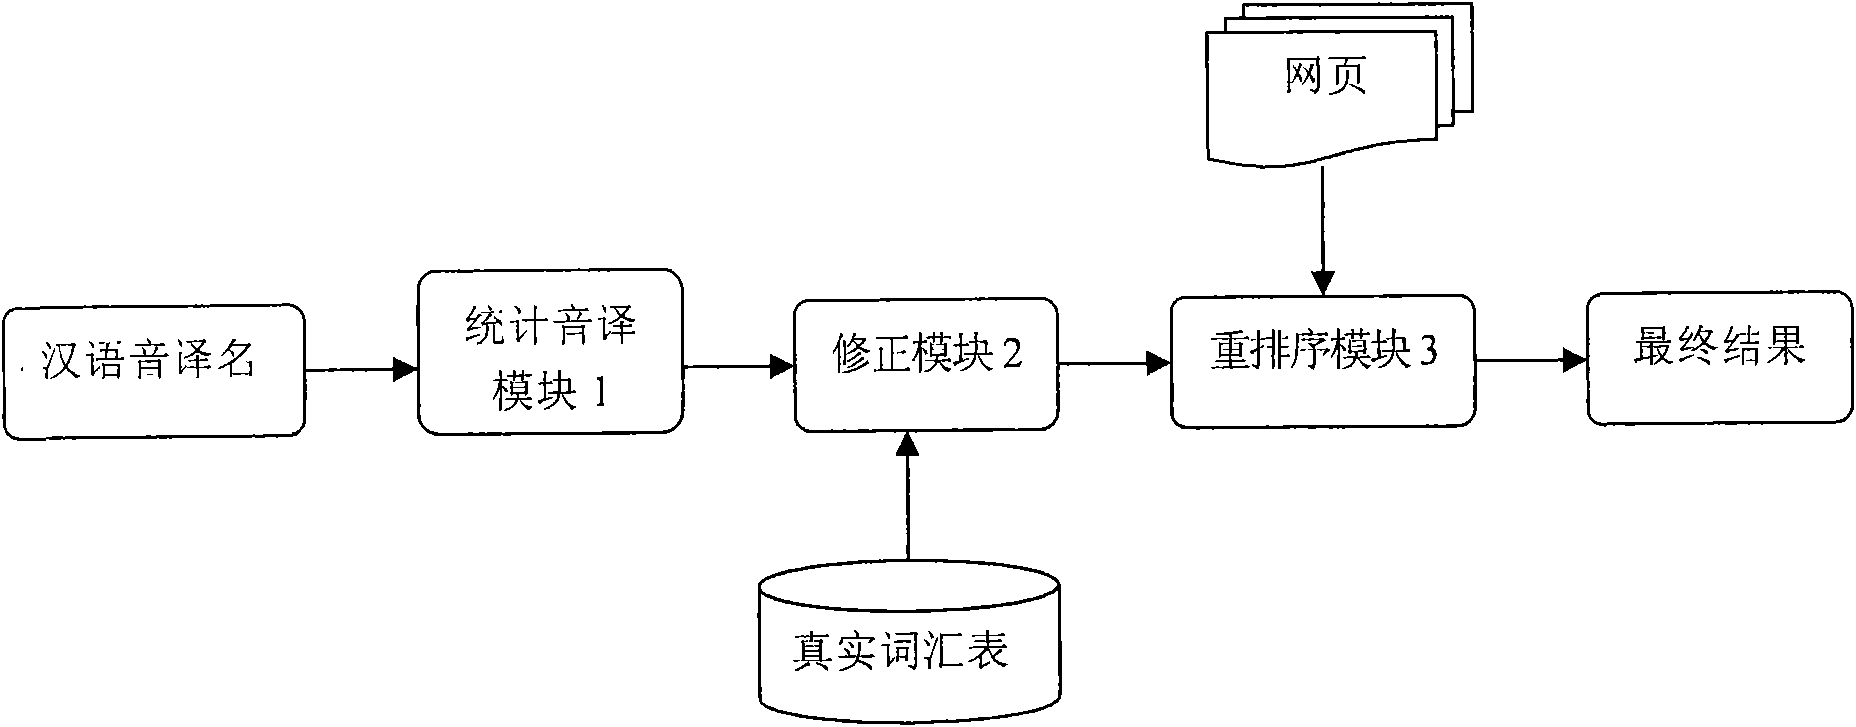 Reverse Chinese-English transliteration method and device thereof